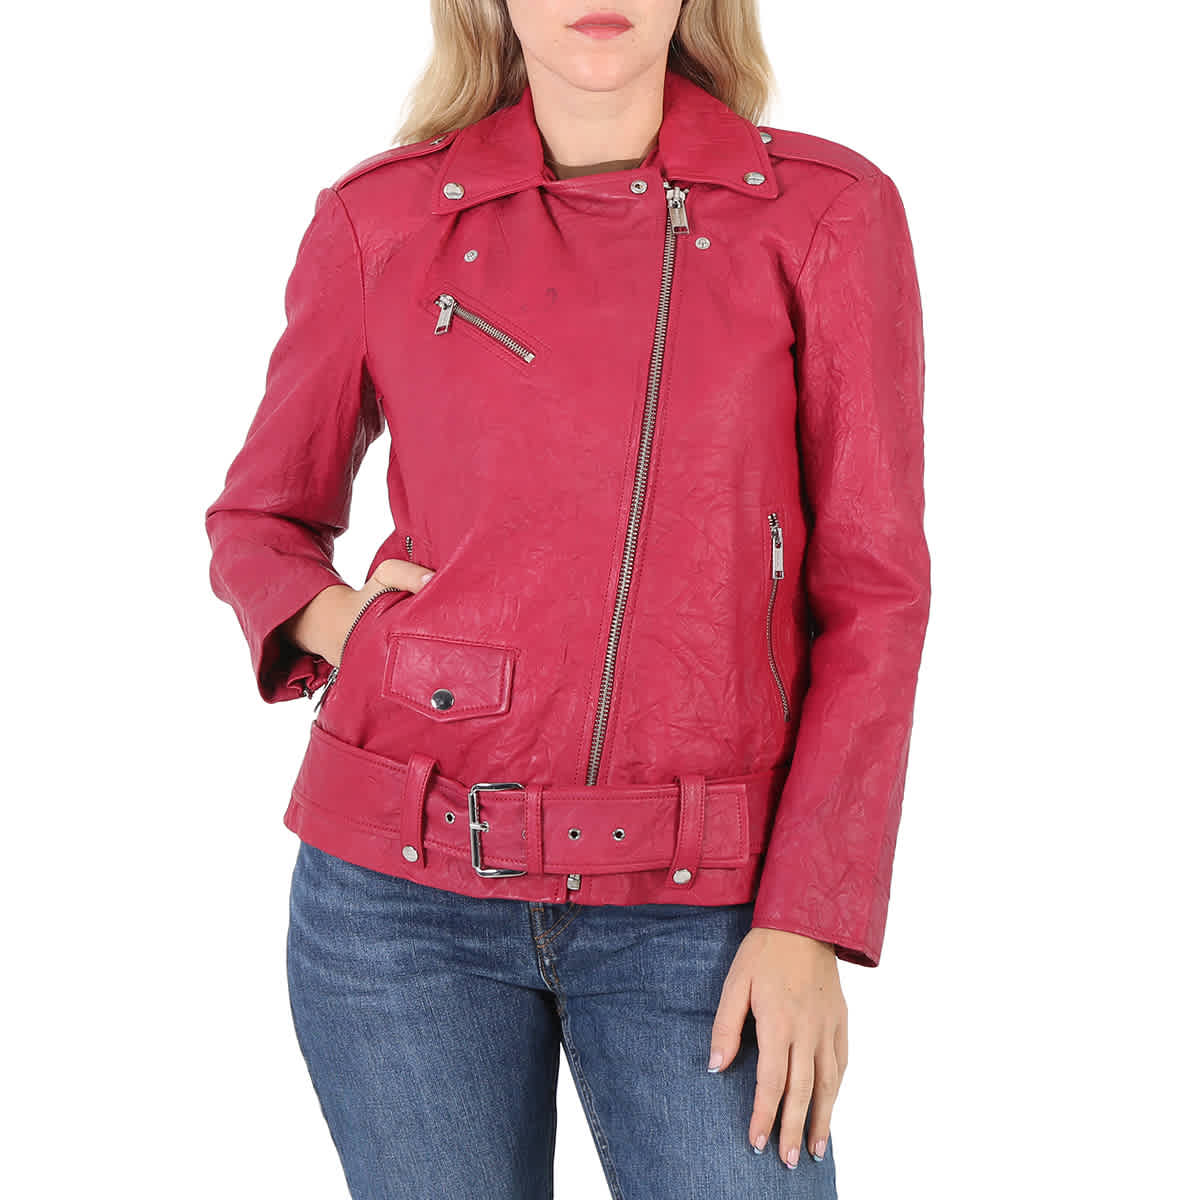 Michael Kors Ladies Crinkled Leather Moto Jacket, Size Small - image 1 of 1